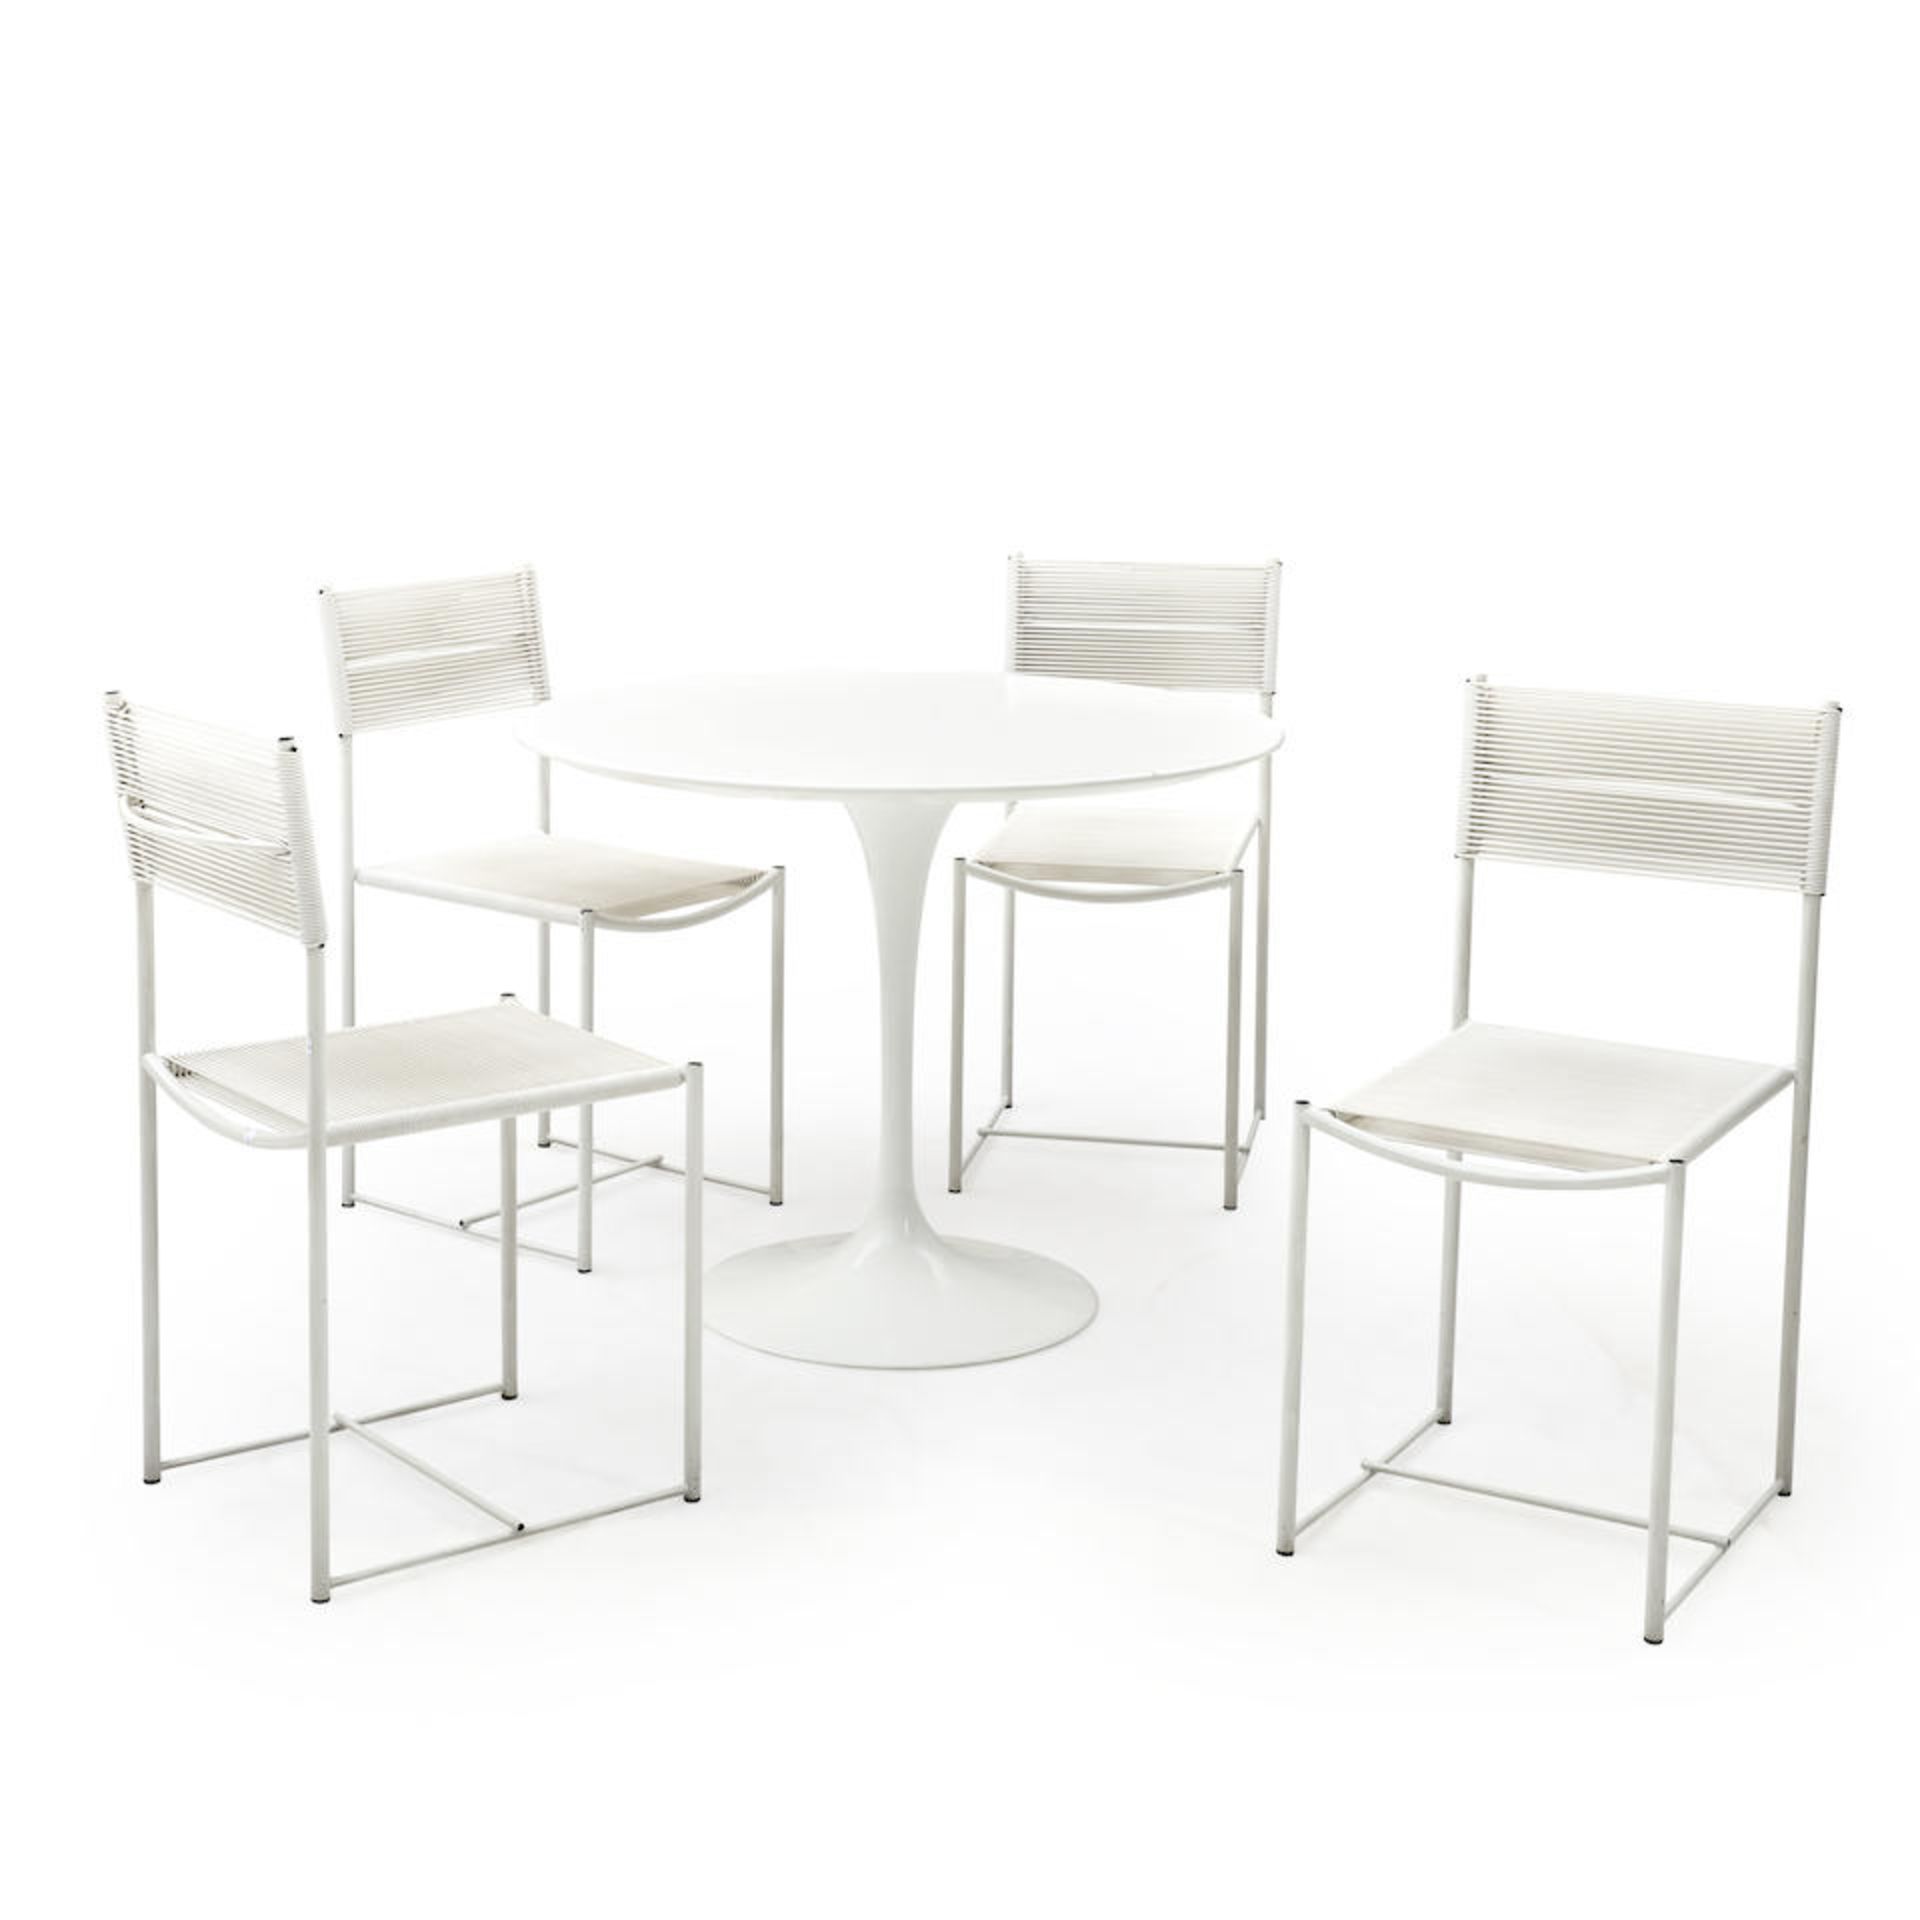 FOUR WHITE ALIAS SPAGHETTI CHAIRS AND A WHITE KNOLL-STYLE TABLE